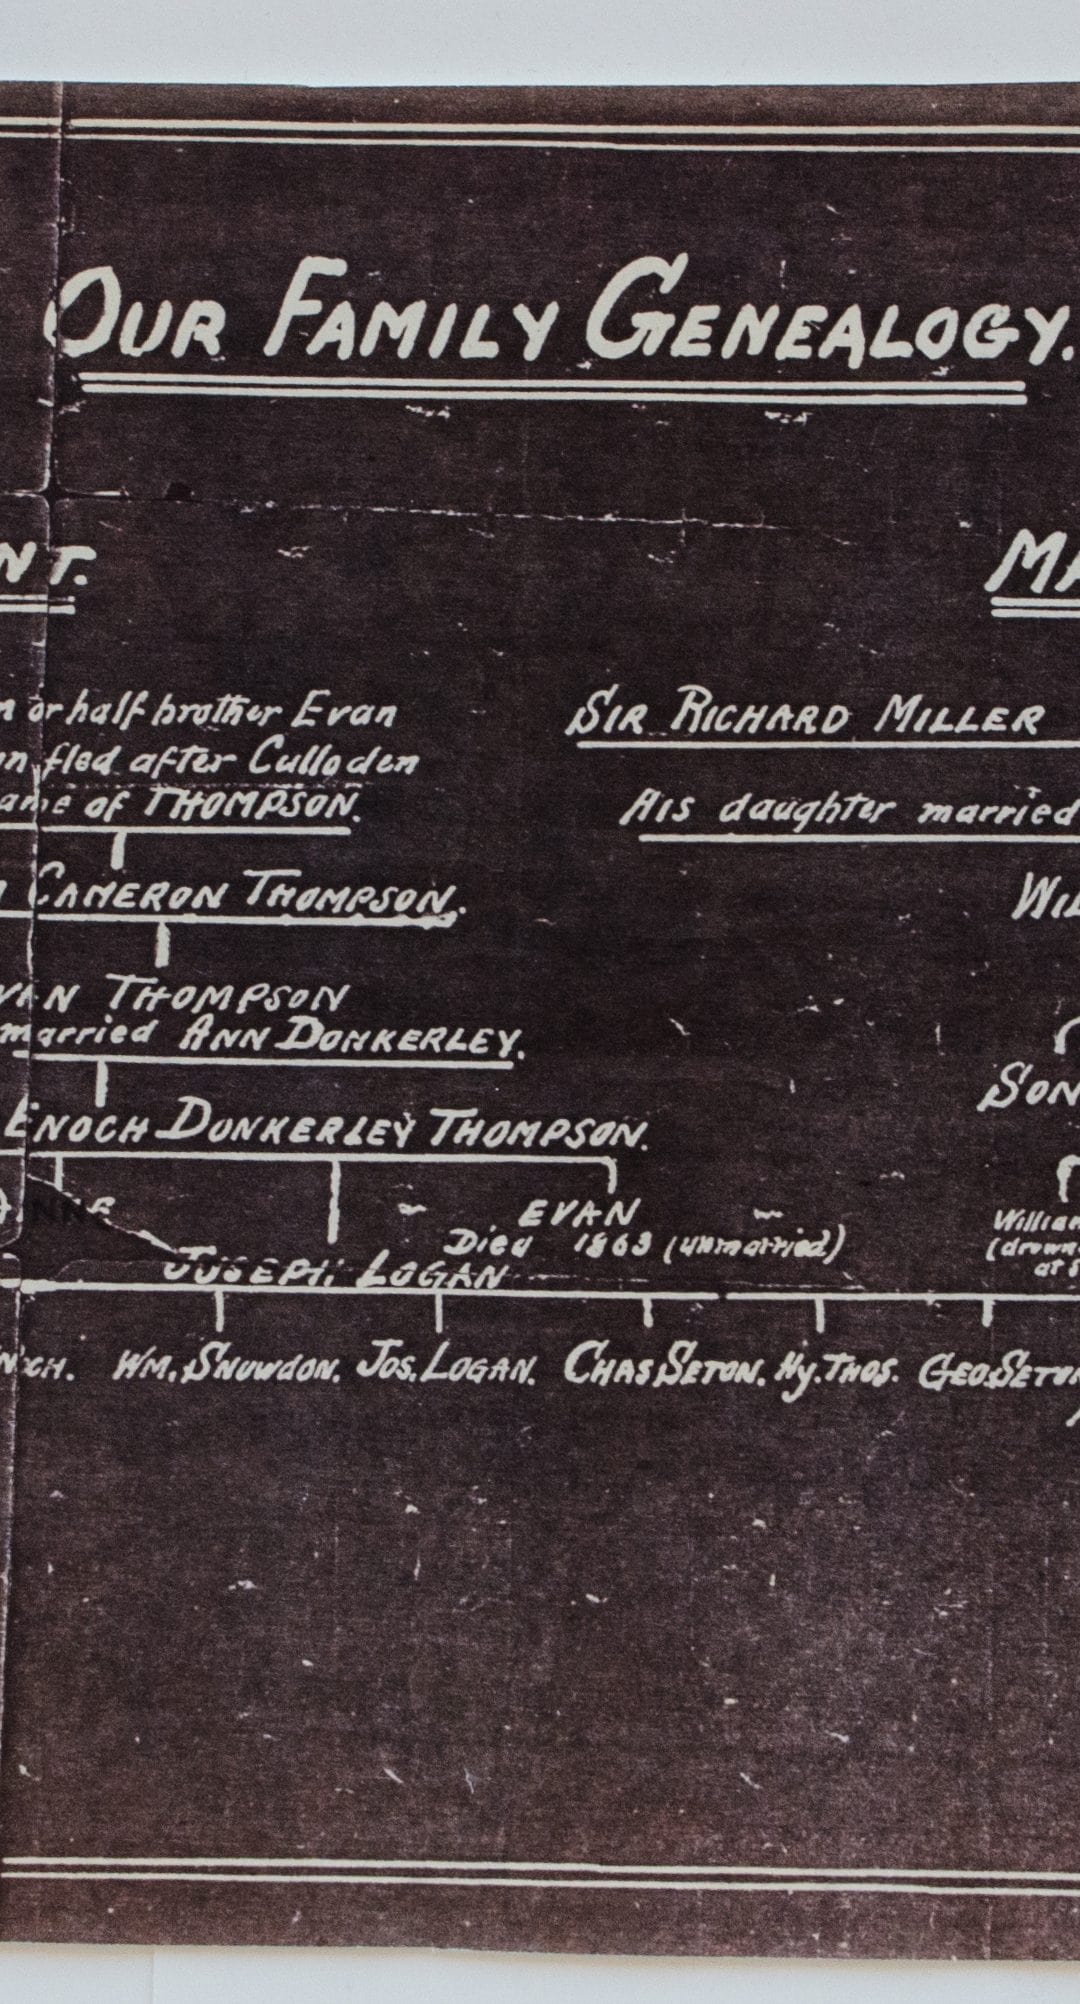 Seton, Cameron, Thompson Genealogy